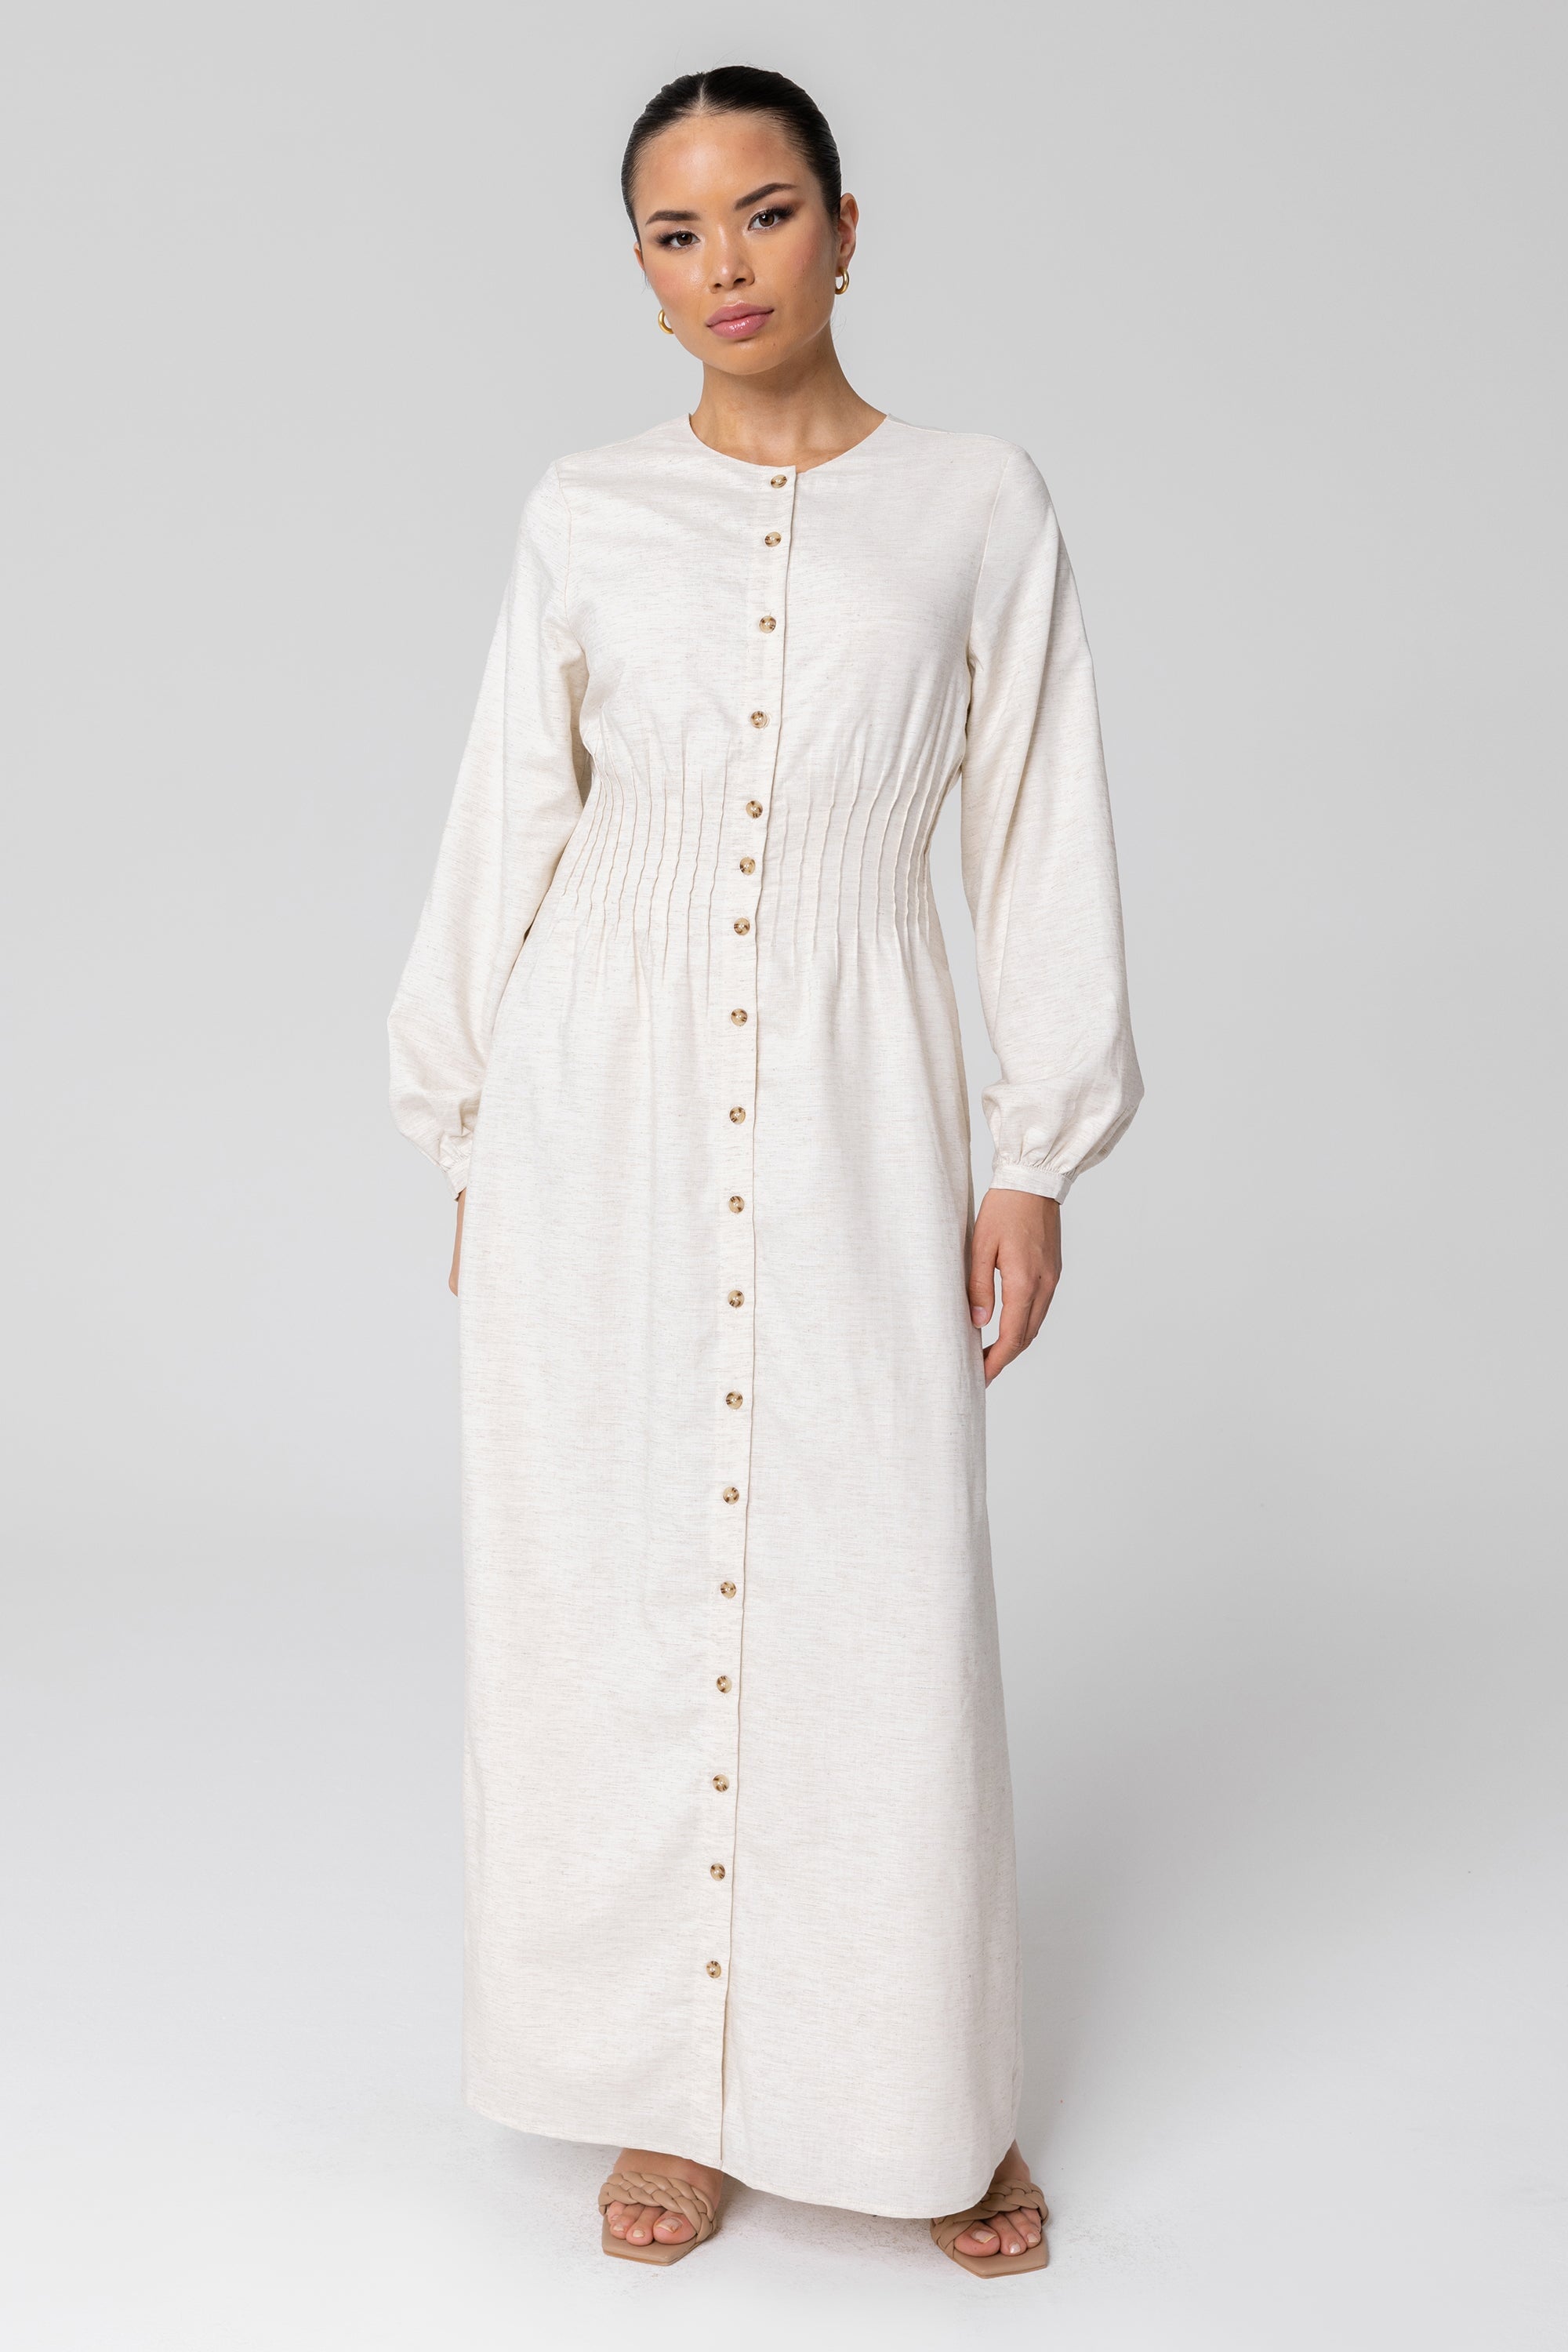 Lila Linen Button Down Maxi Dress - Off White